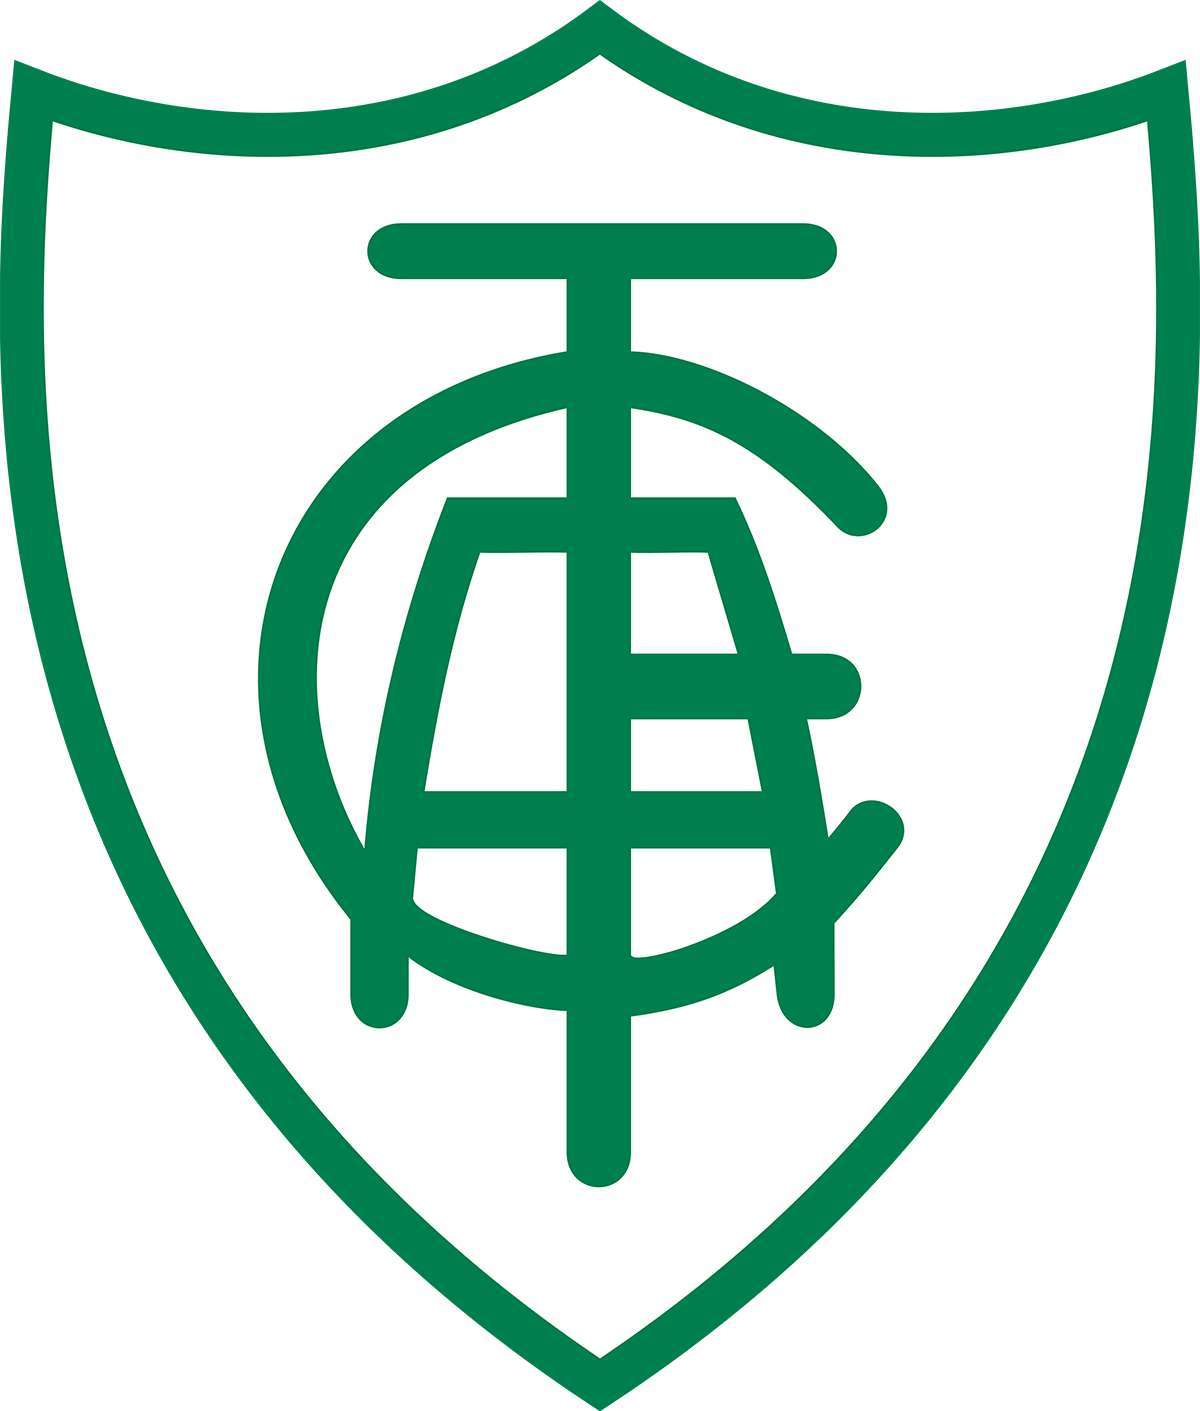 2016 Campeonato Brasileiro Série A - Wikipedia